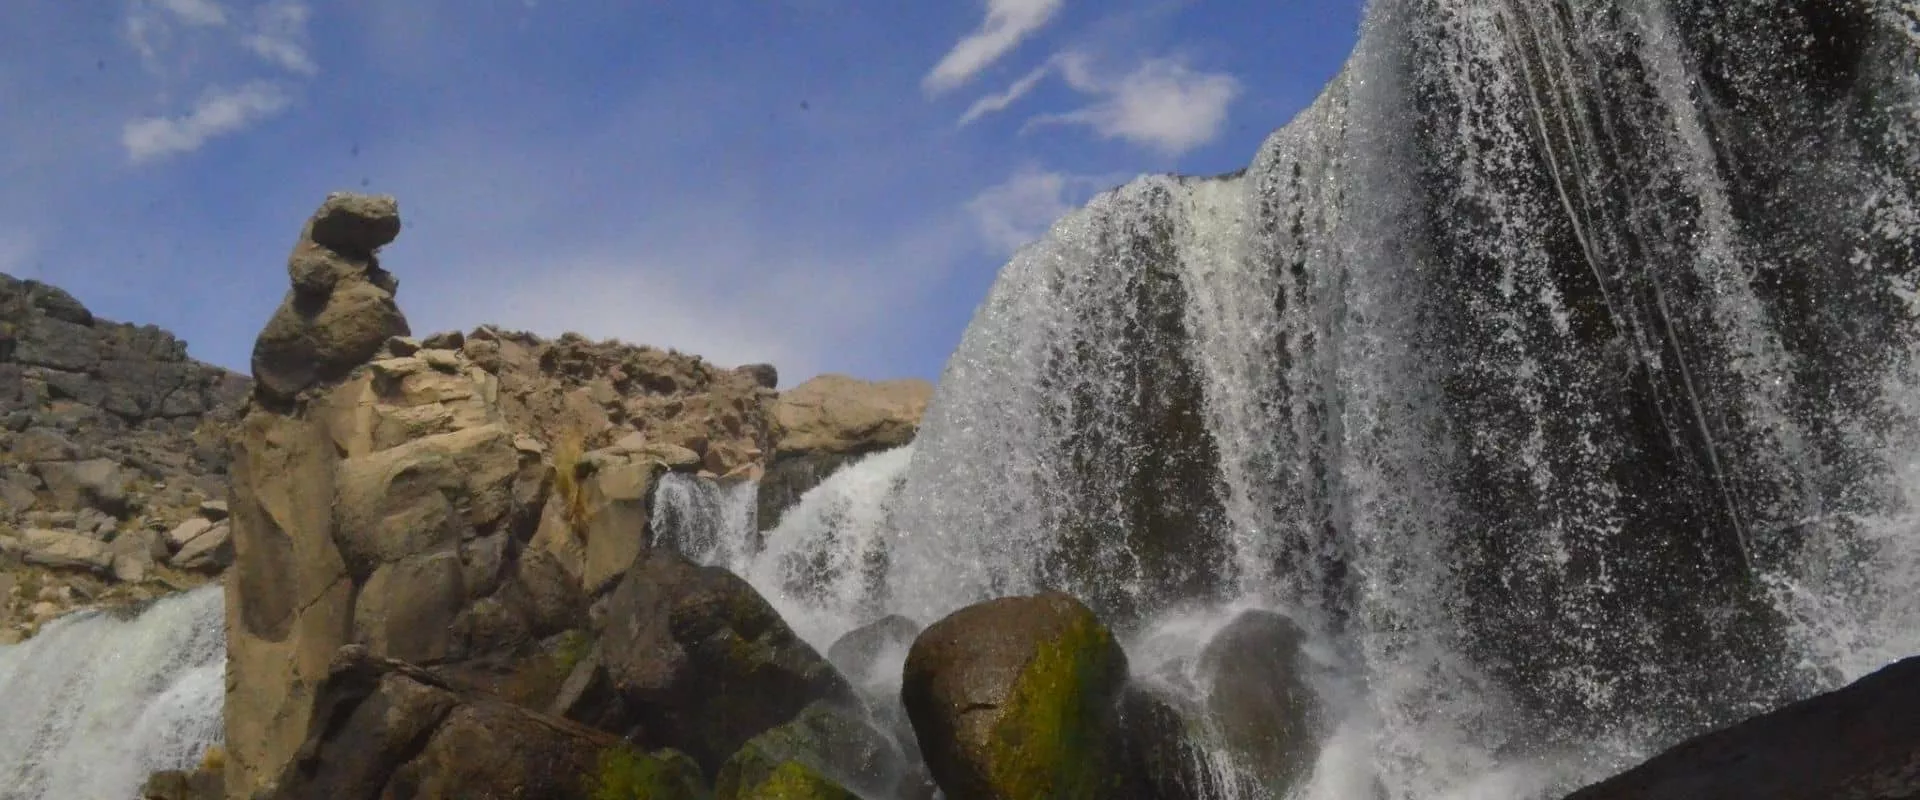 Waterfall Pillones in Peru, South America | Waterfalls - Rated 0.9